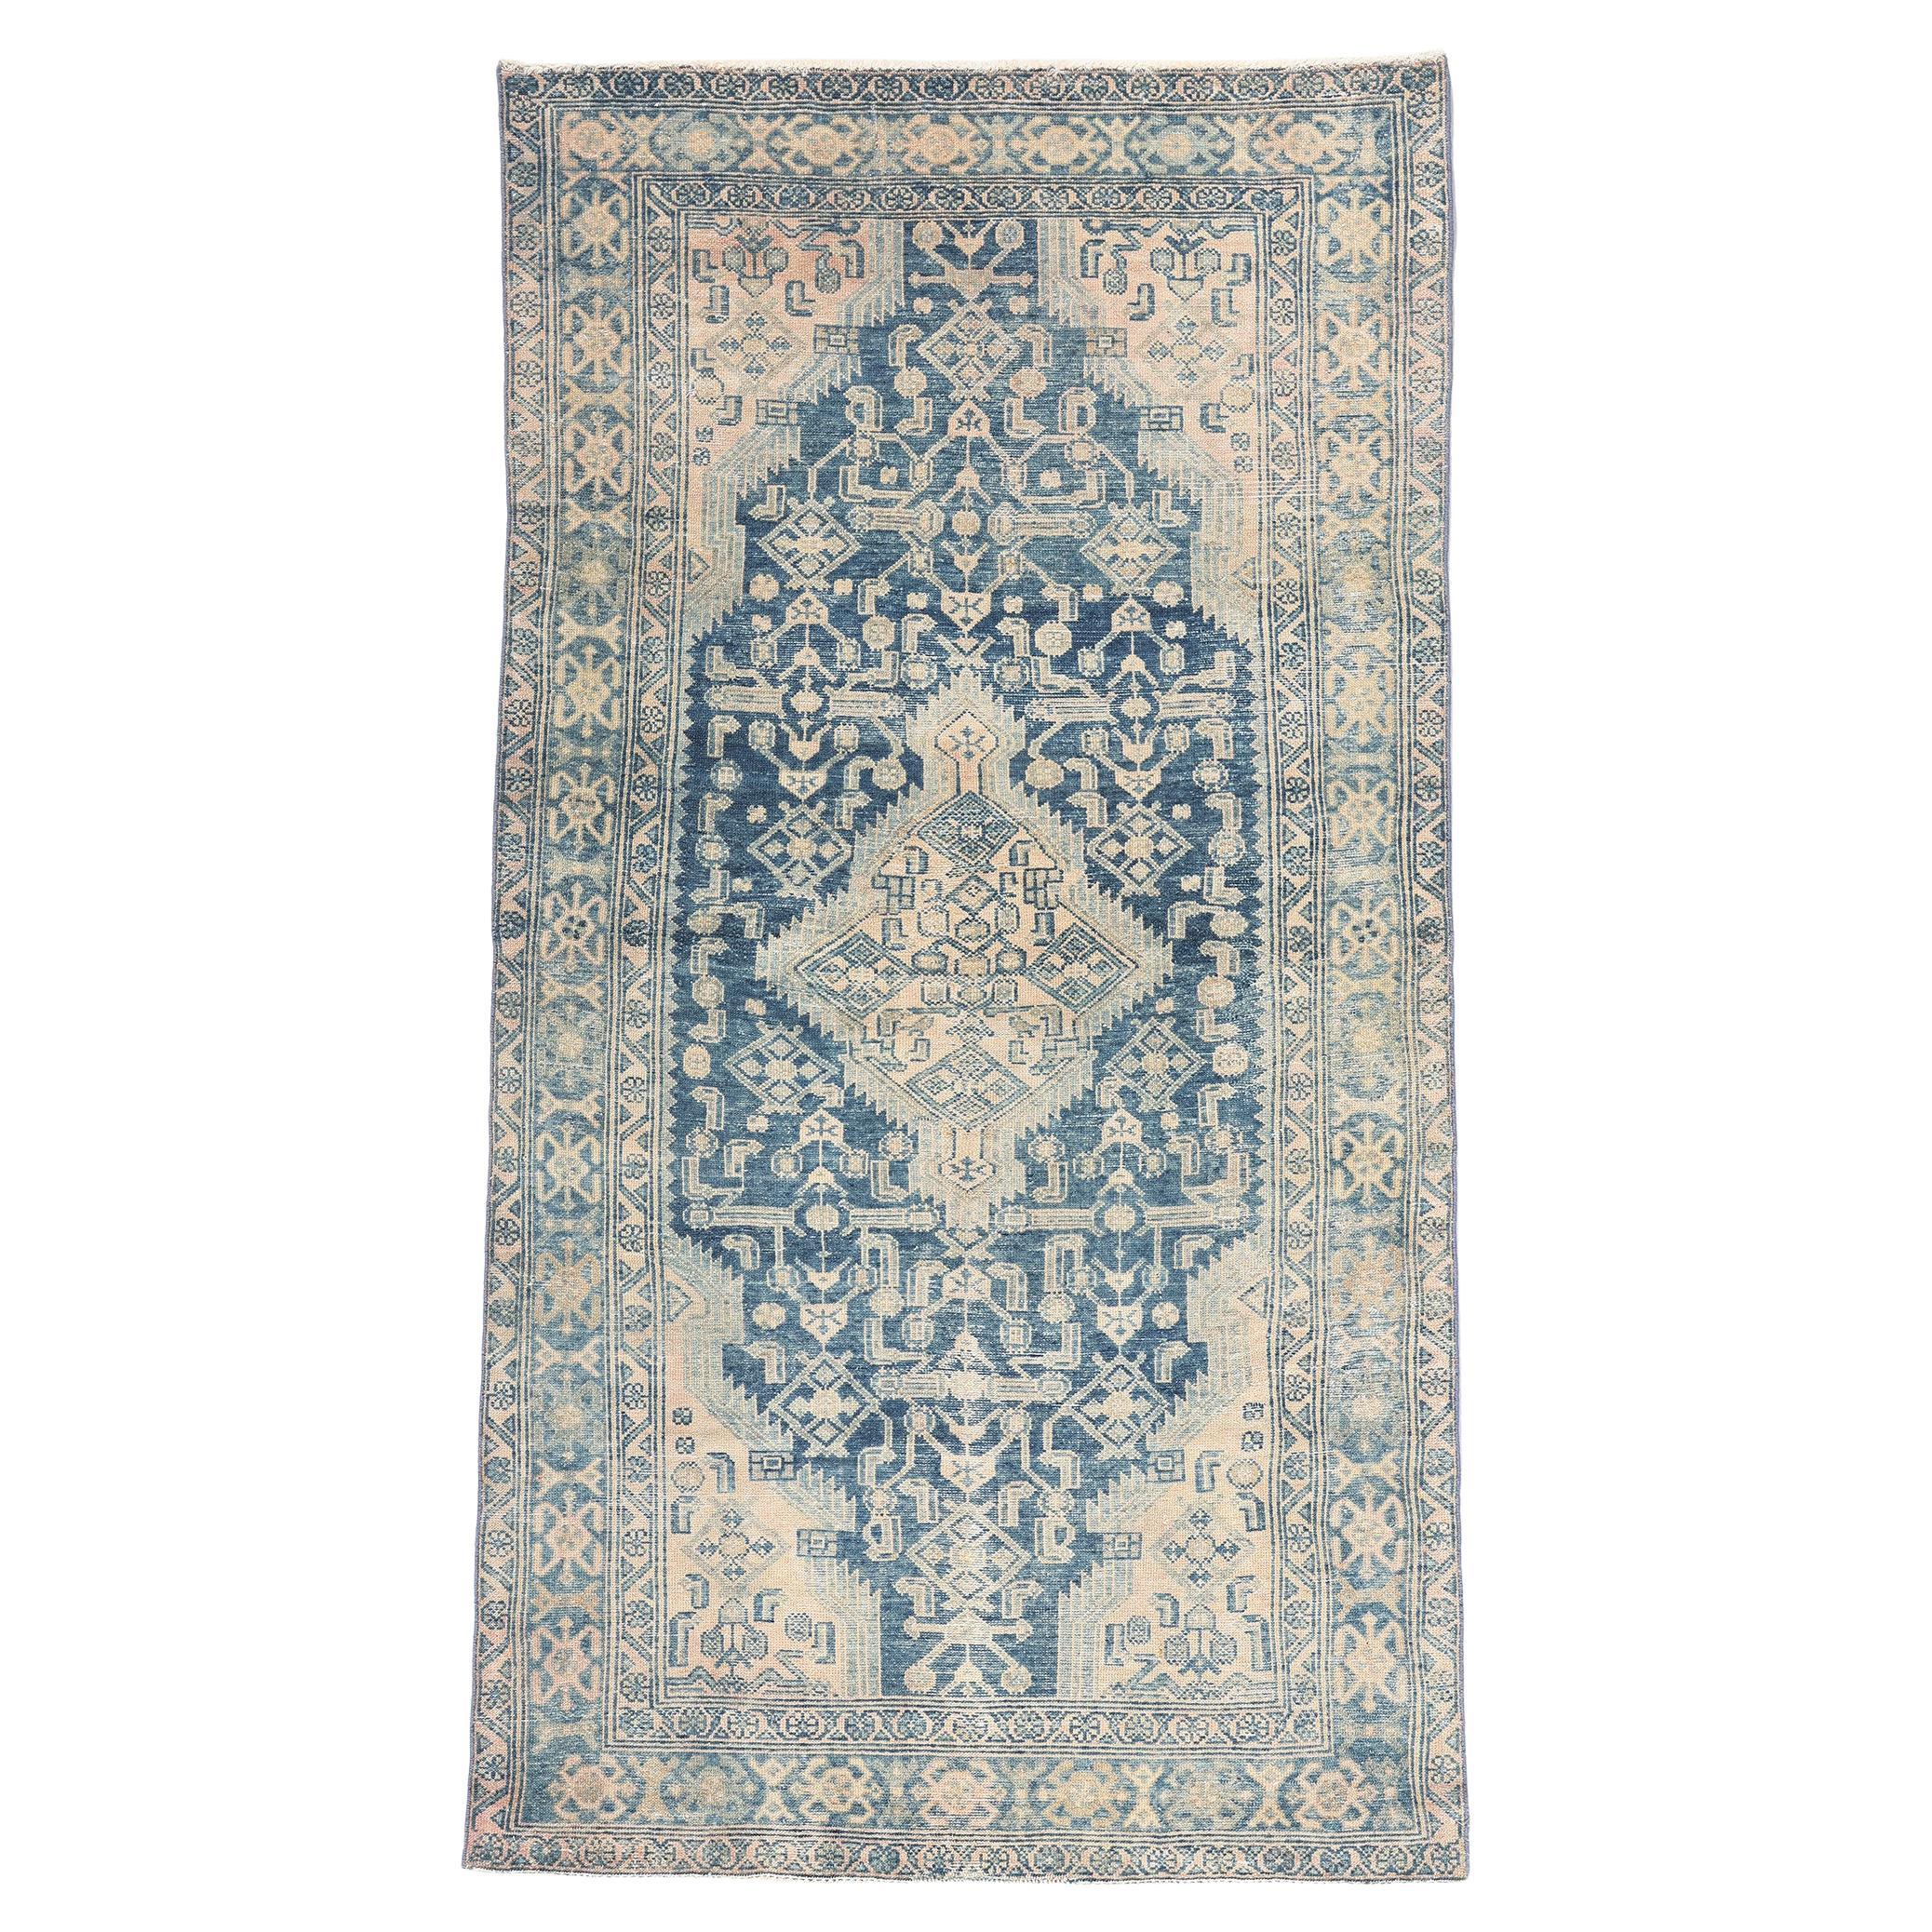 Antique Blue Persian Malayer Carpet For Sale